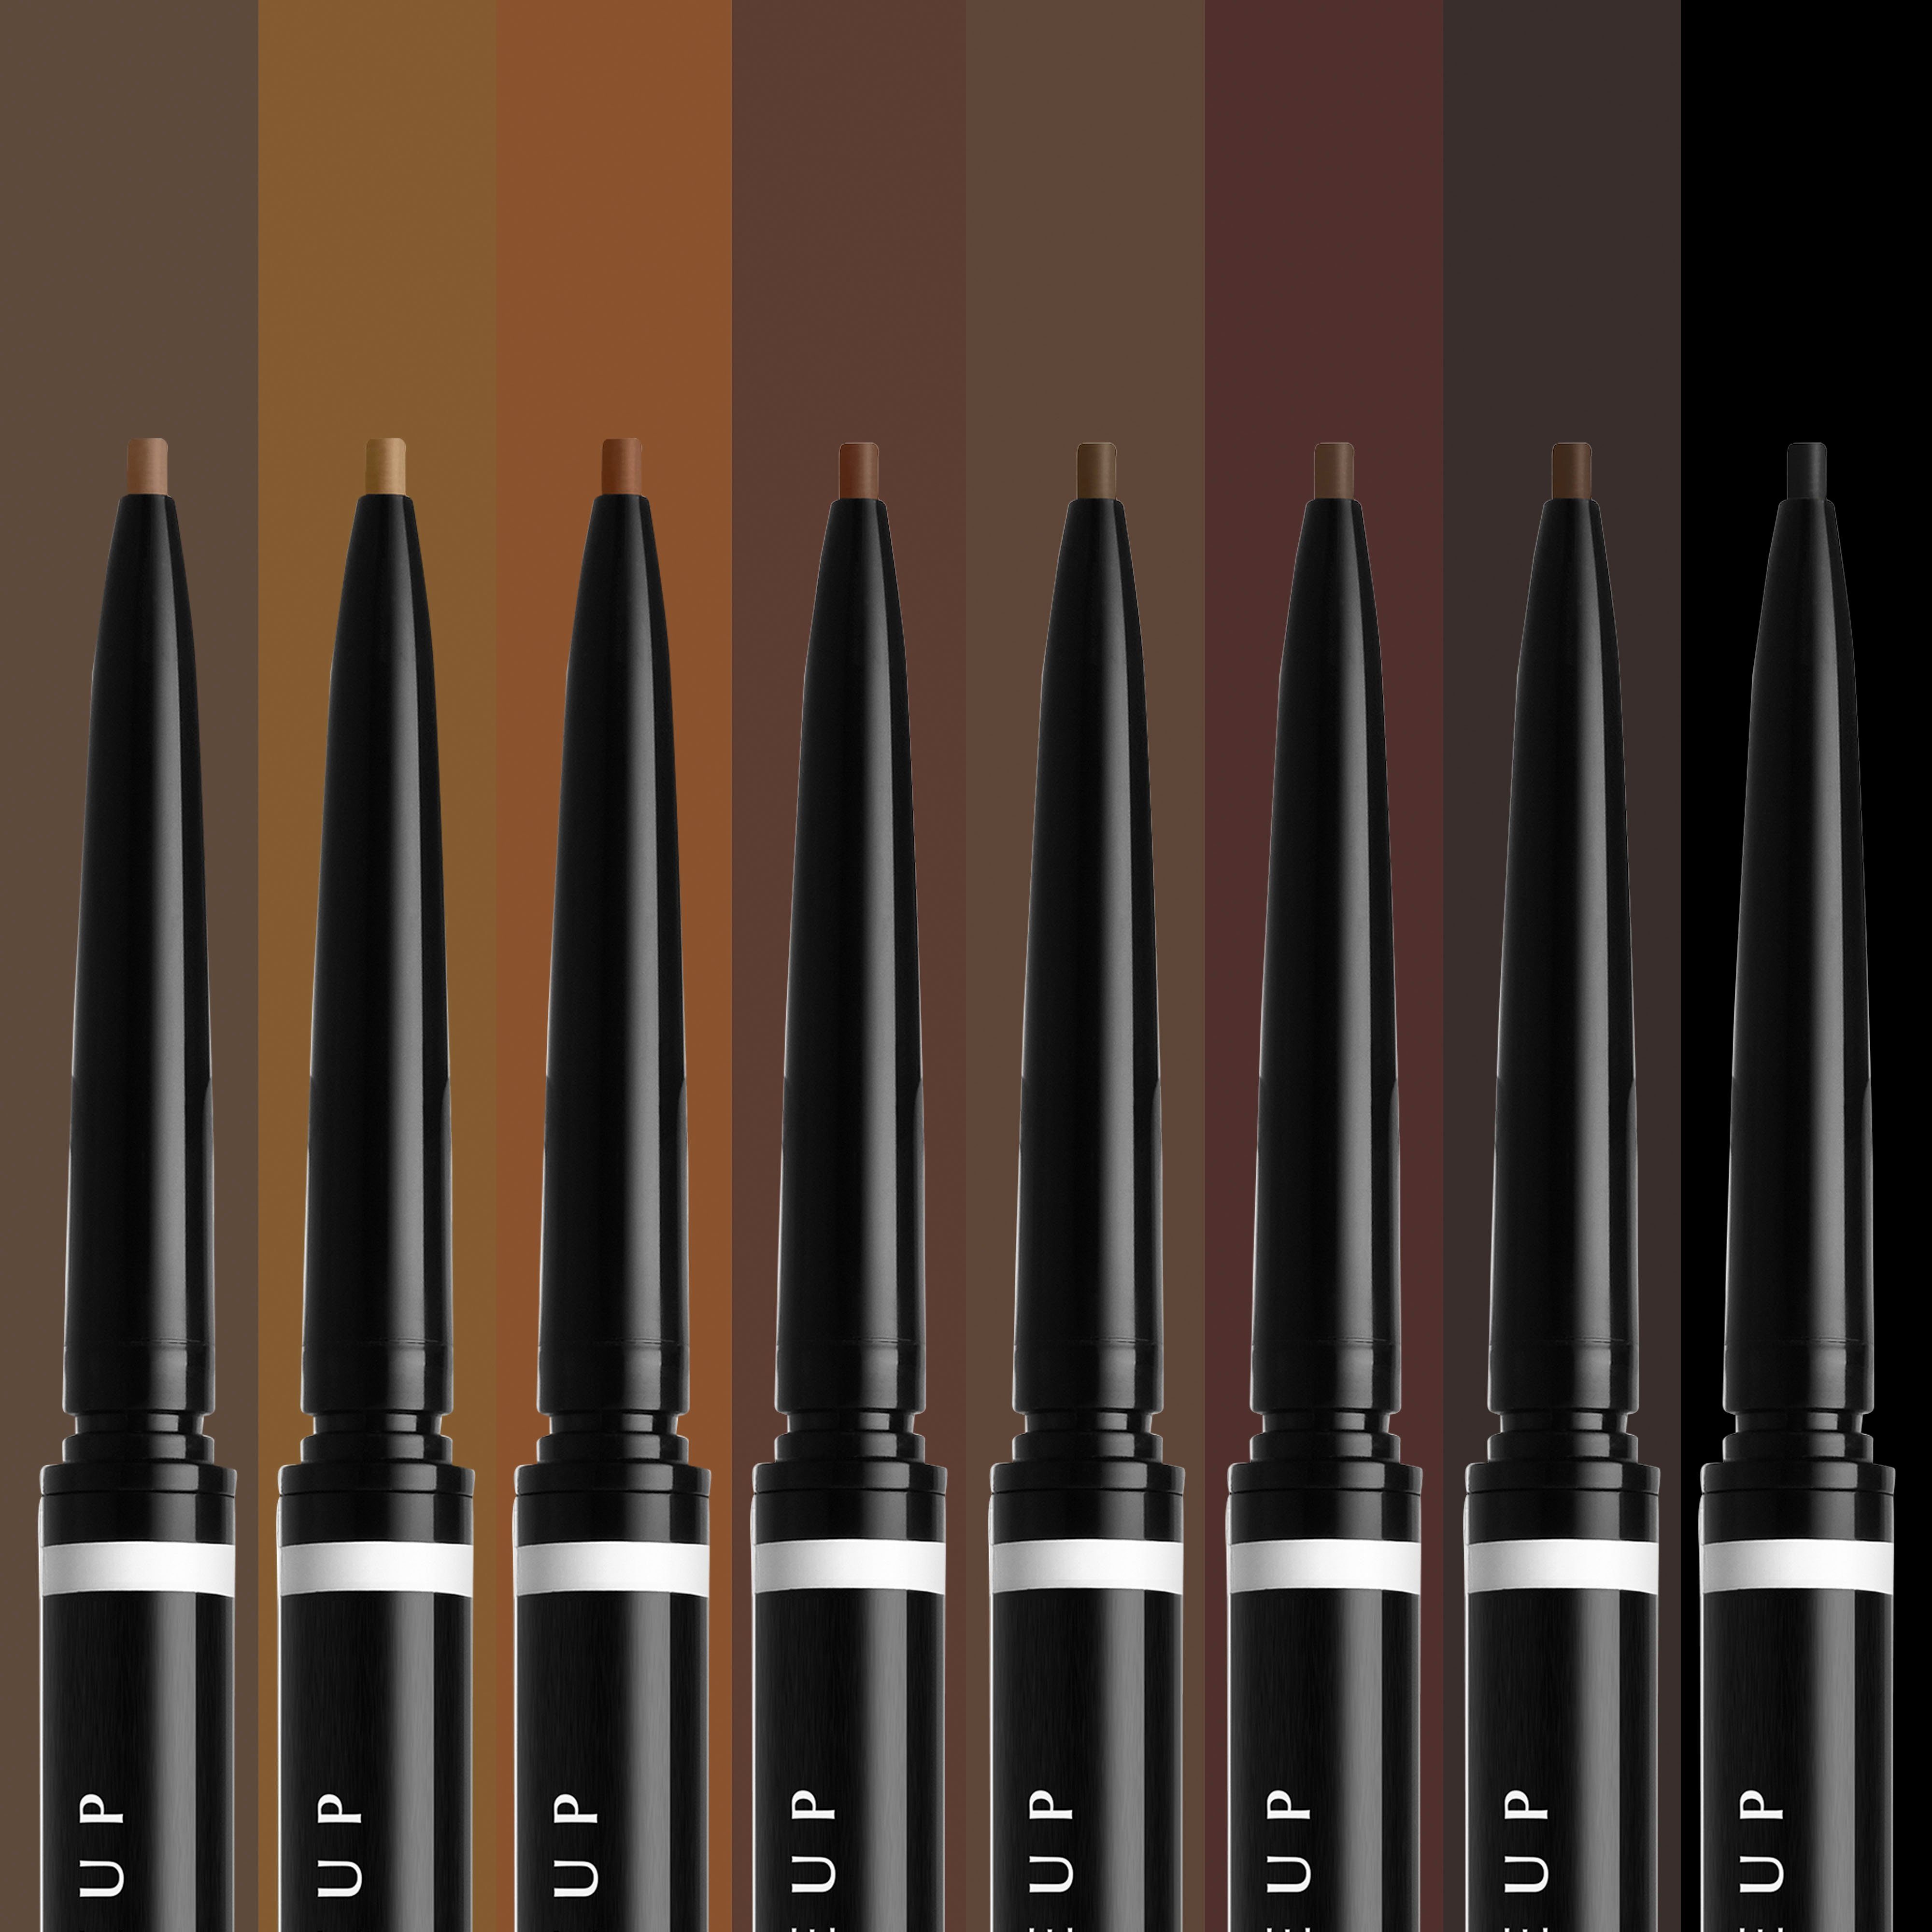 NYX Augenbrauen-Stift Pencil Makeup Micro Professional Brow auburn